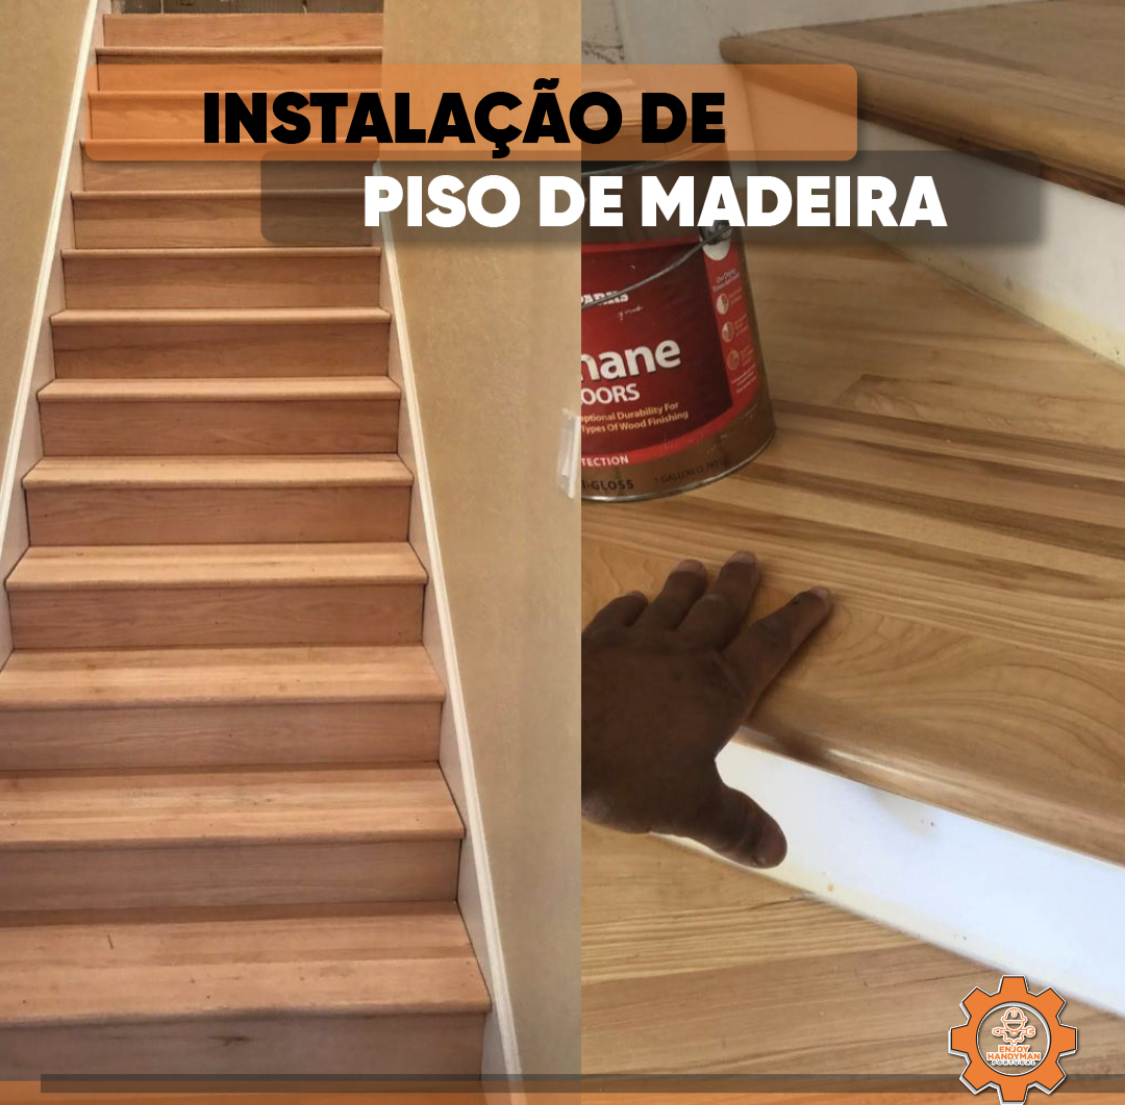 Enjoy Handyman Portugal (JorgeLuiz&EnedinnaSantos) - Vila Nova de Gaia - Remodelação de Loja